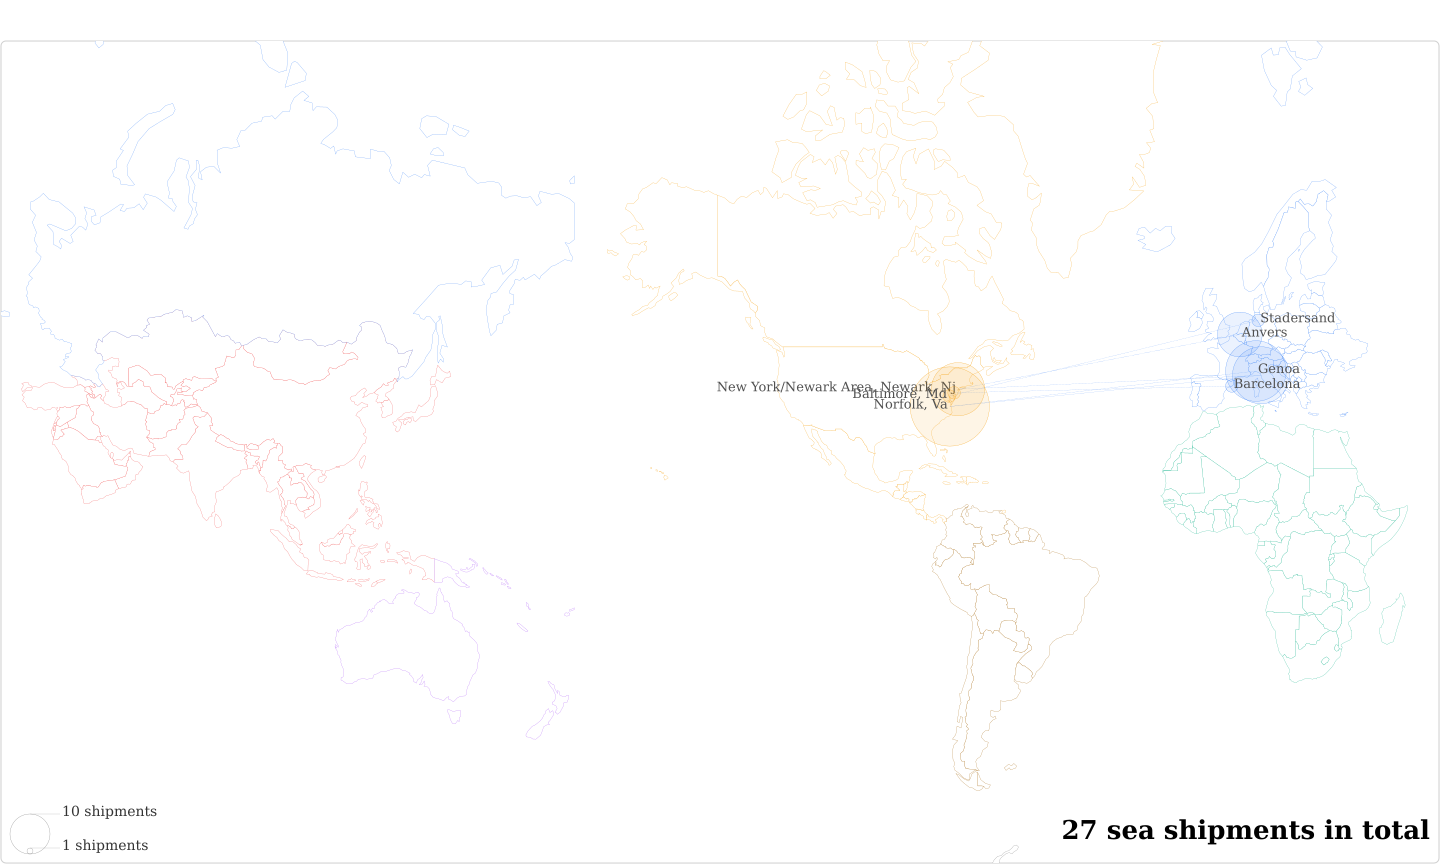 Ics Regeneron's Imports Per Country Map